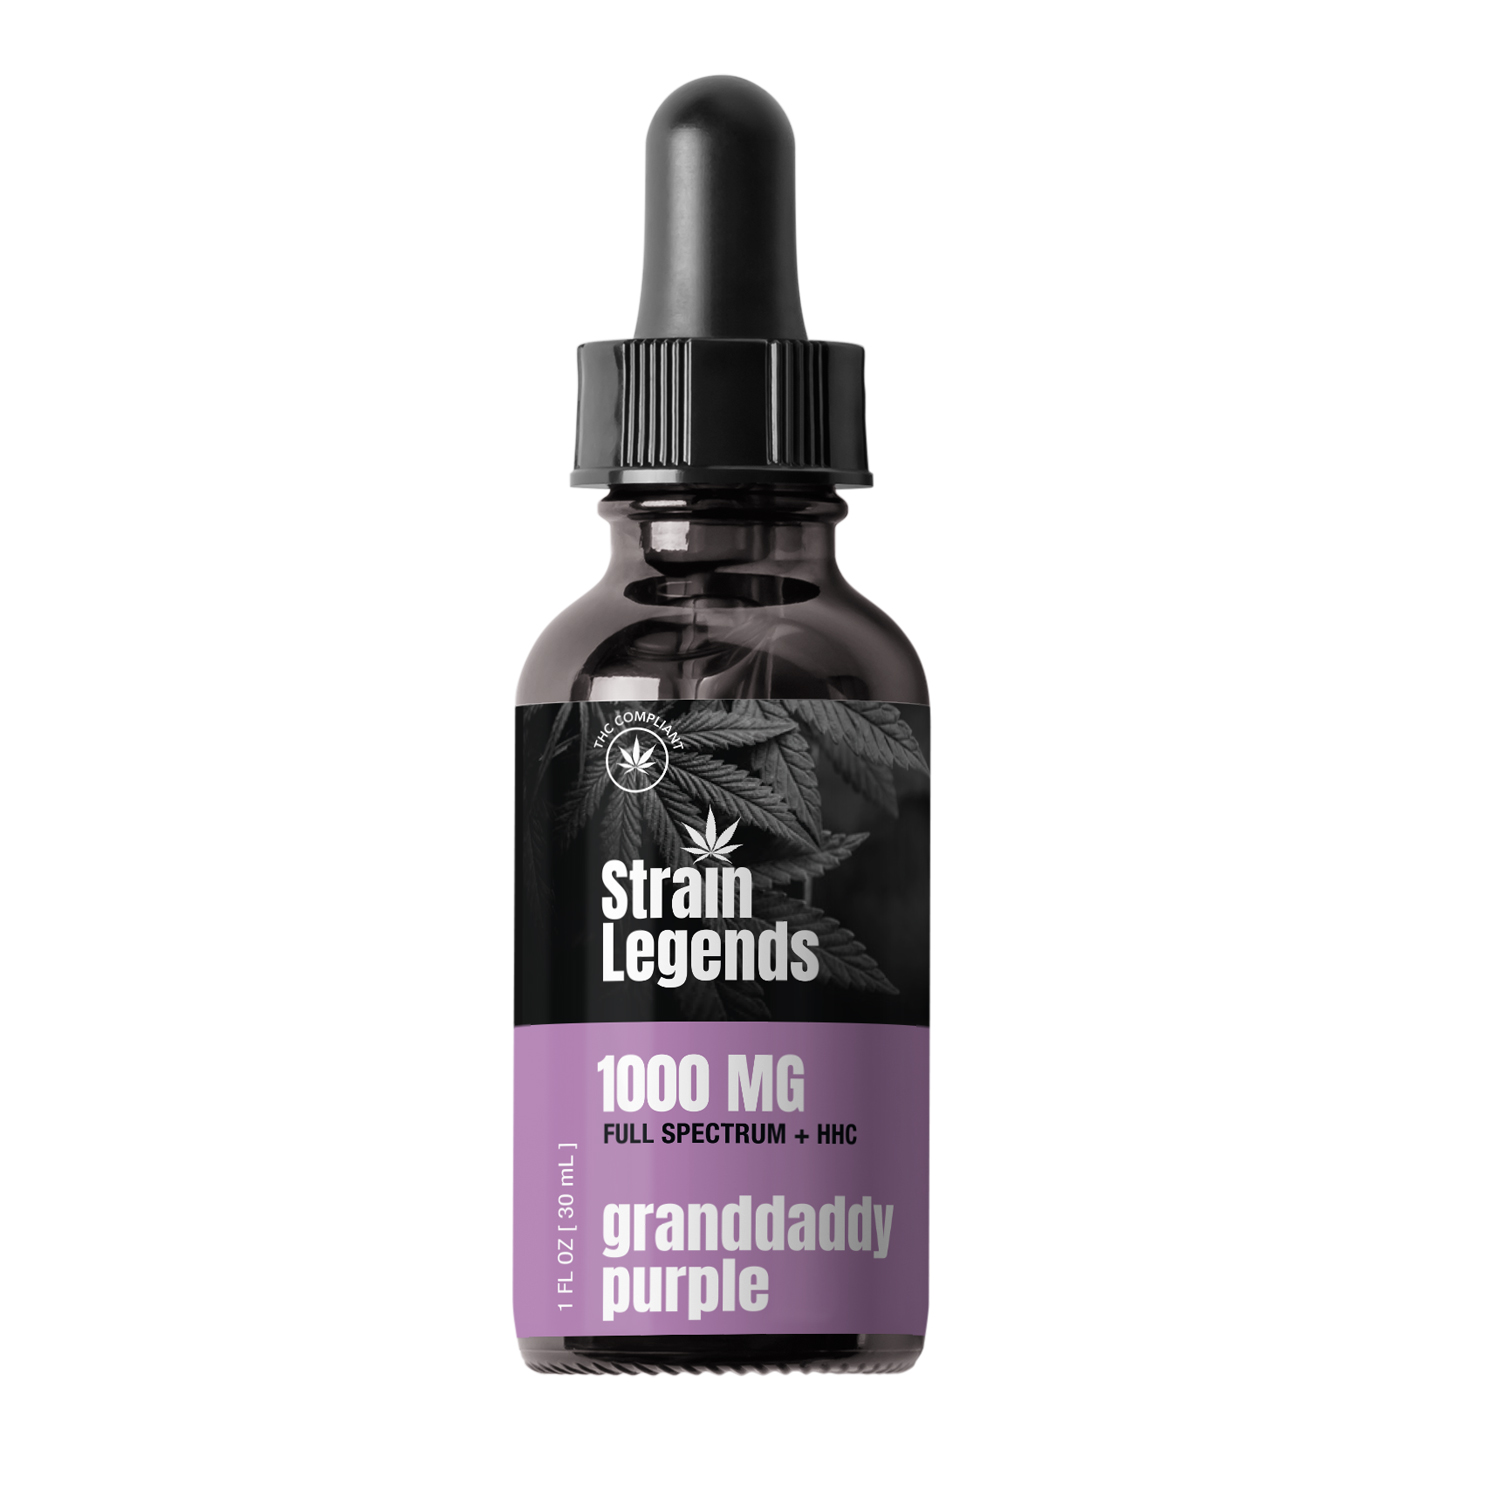 Strain Legends 1000 mg Full Spectrum + HHC Tincture, Granddaddy Purple